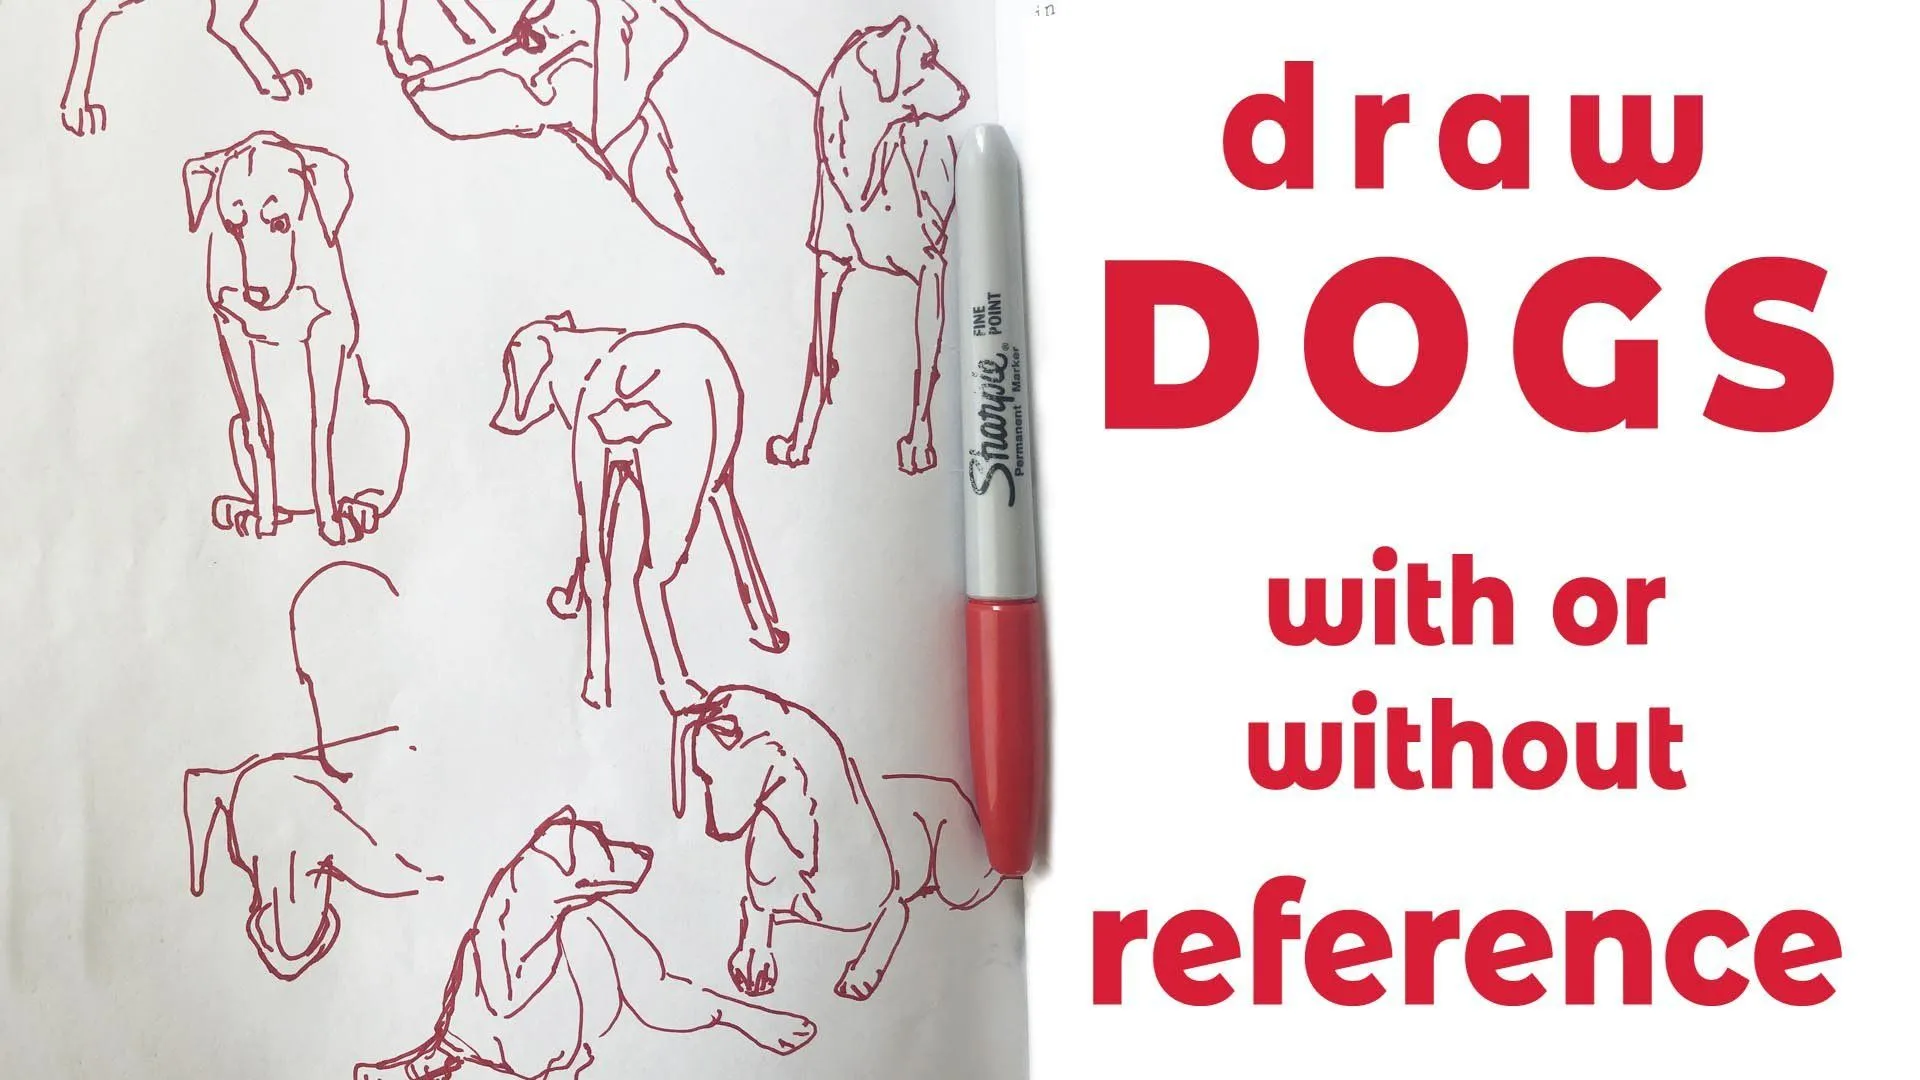 Dibuja perros (o cualquier cosa) con o sin referencia | Steve Worthington |  Skillshare